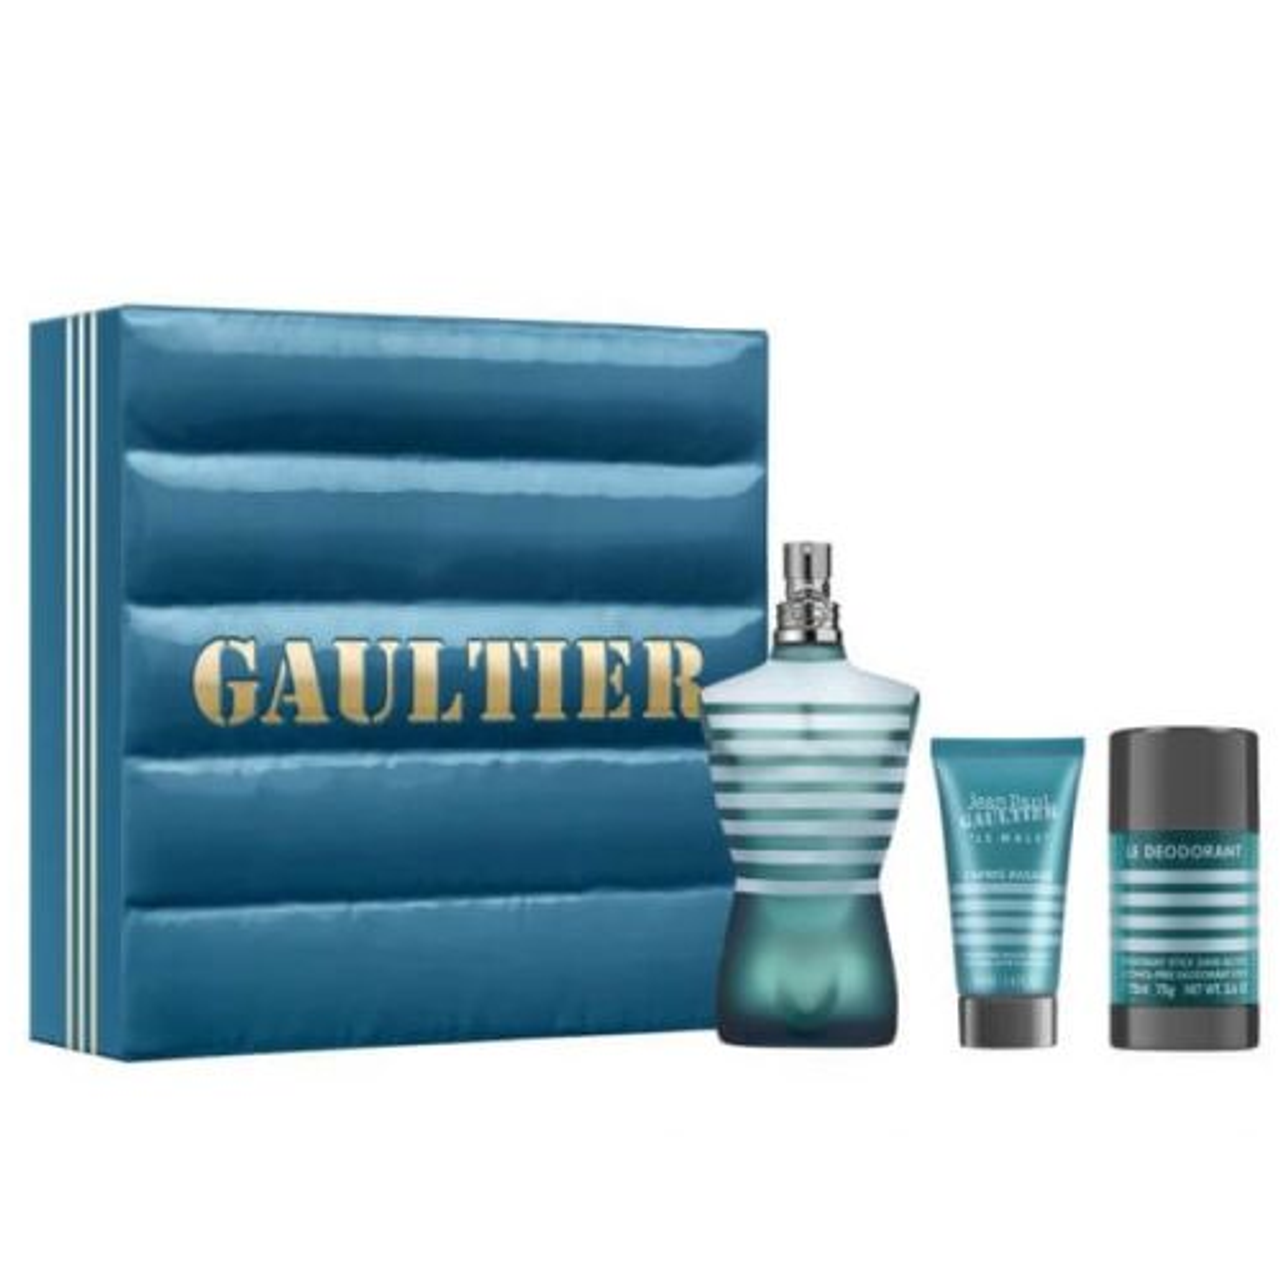 Le Male by Jean Paul Gaultier for Men 4.2 oz EDT 3pc Gift Set